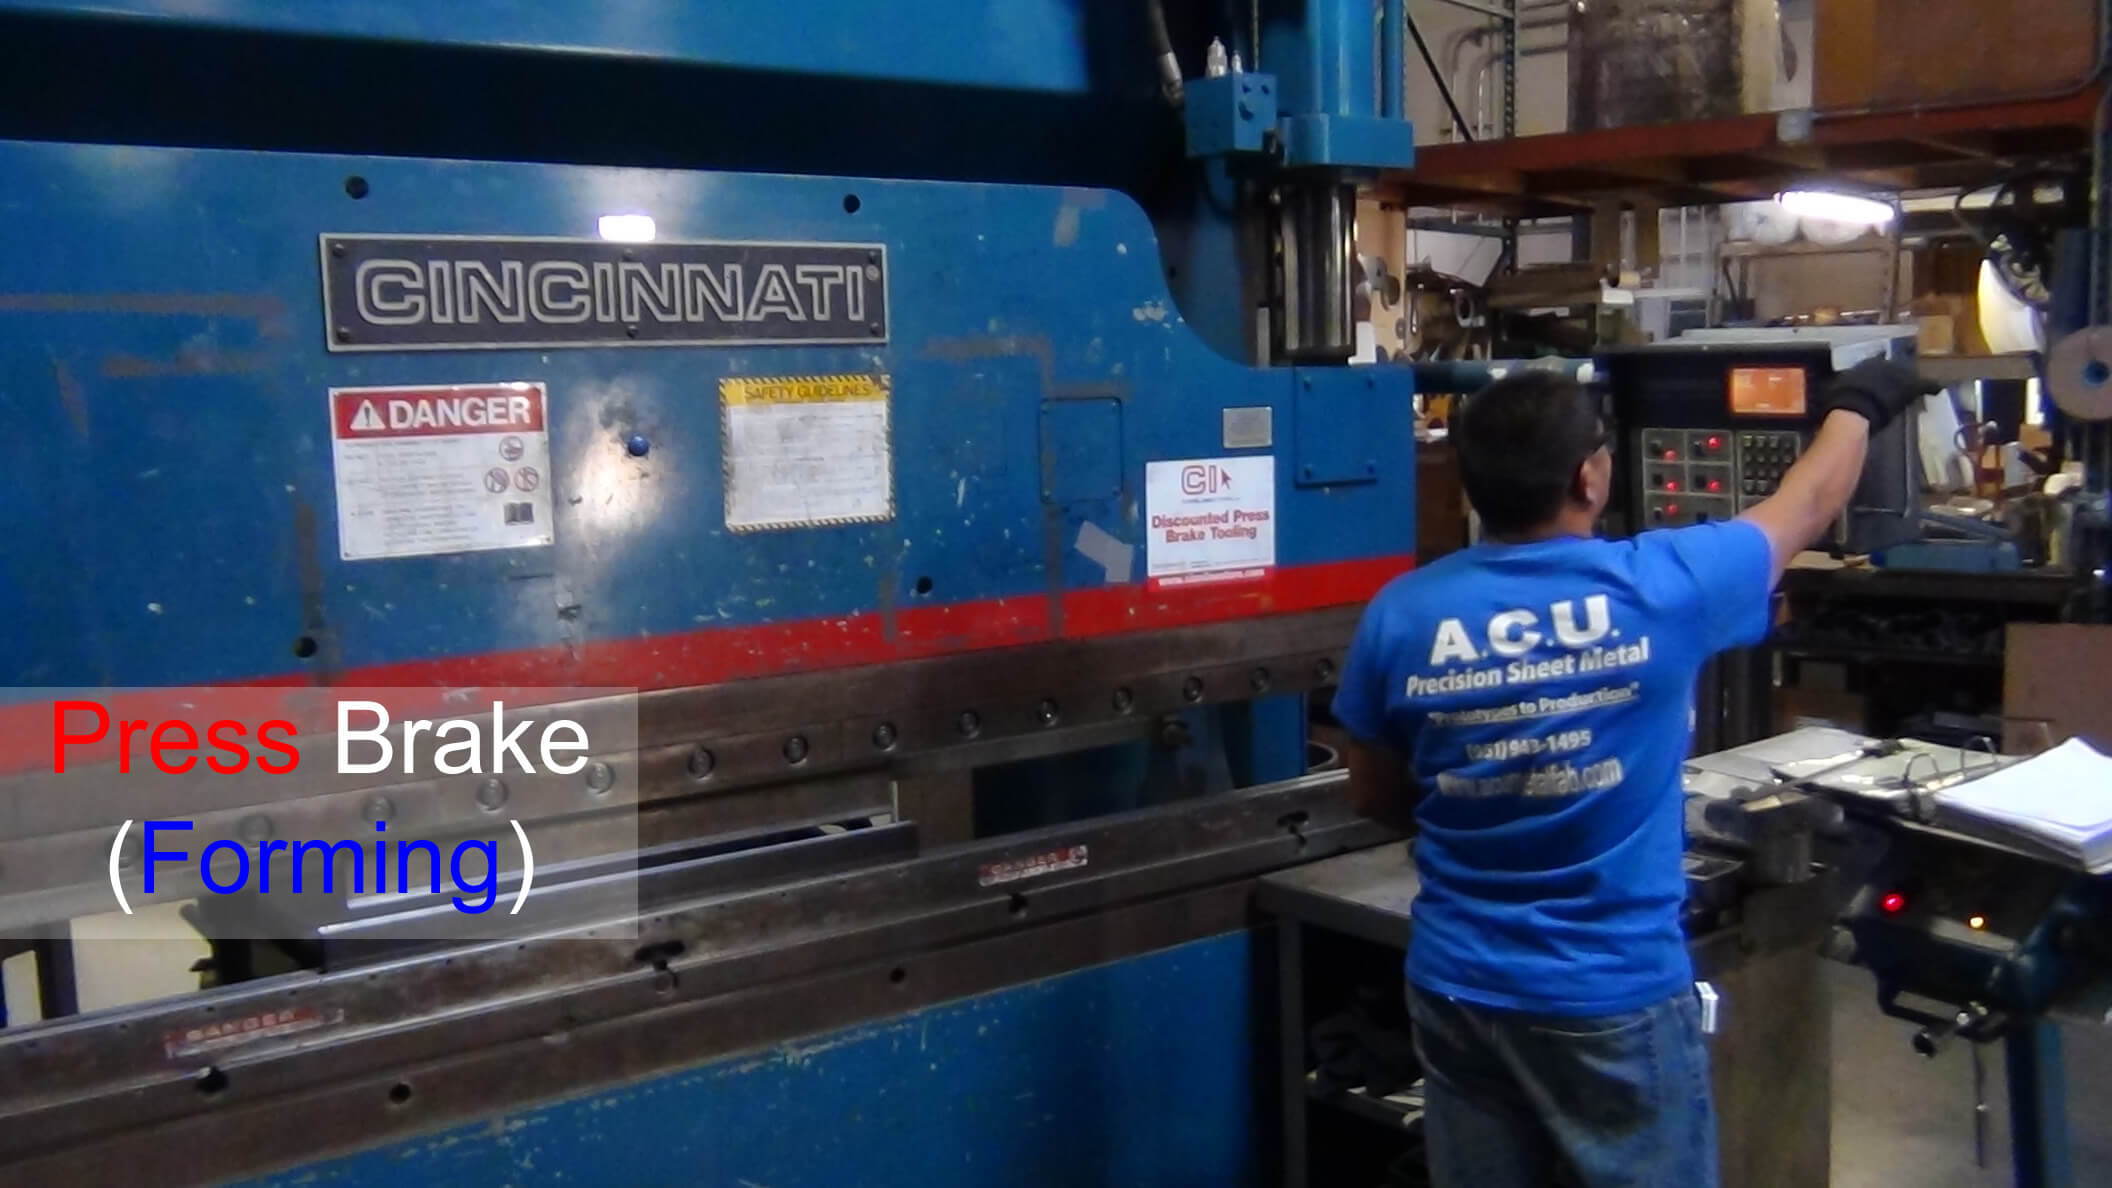 Metal forming press brake from ACU Precision Sheet Metal